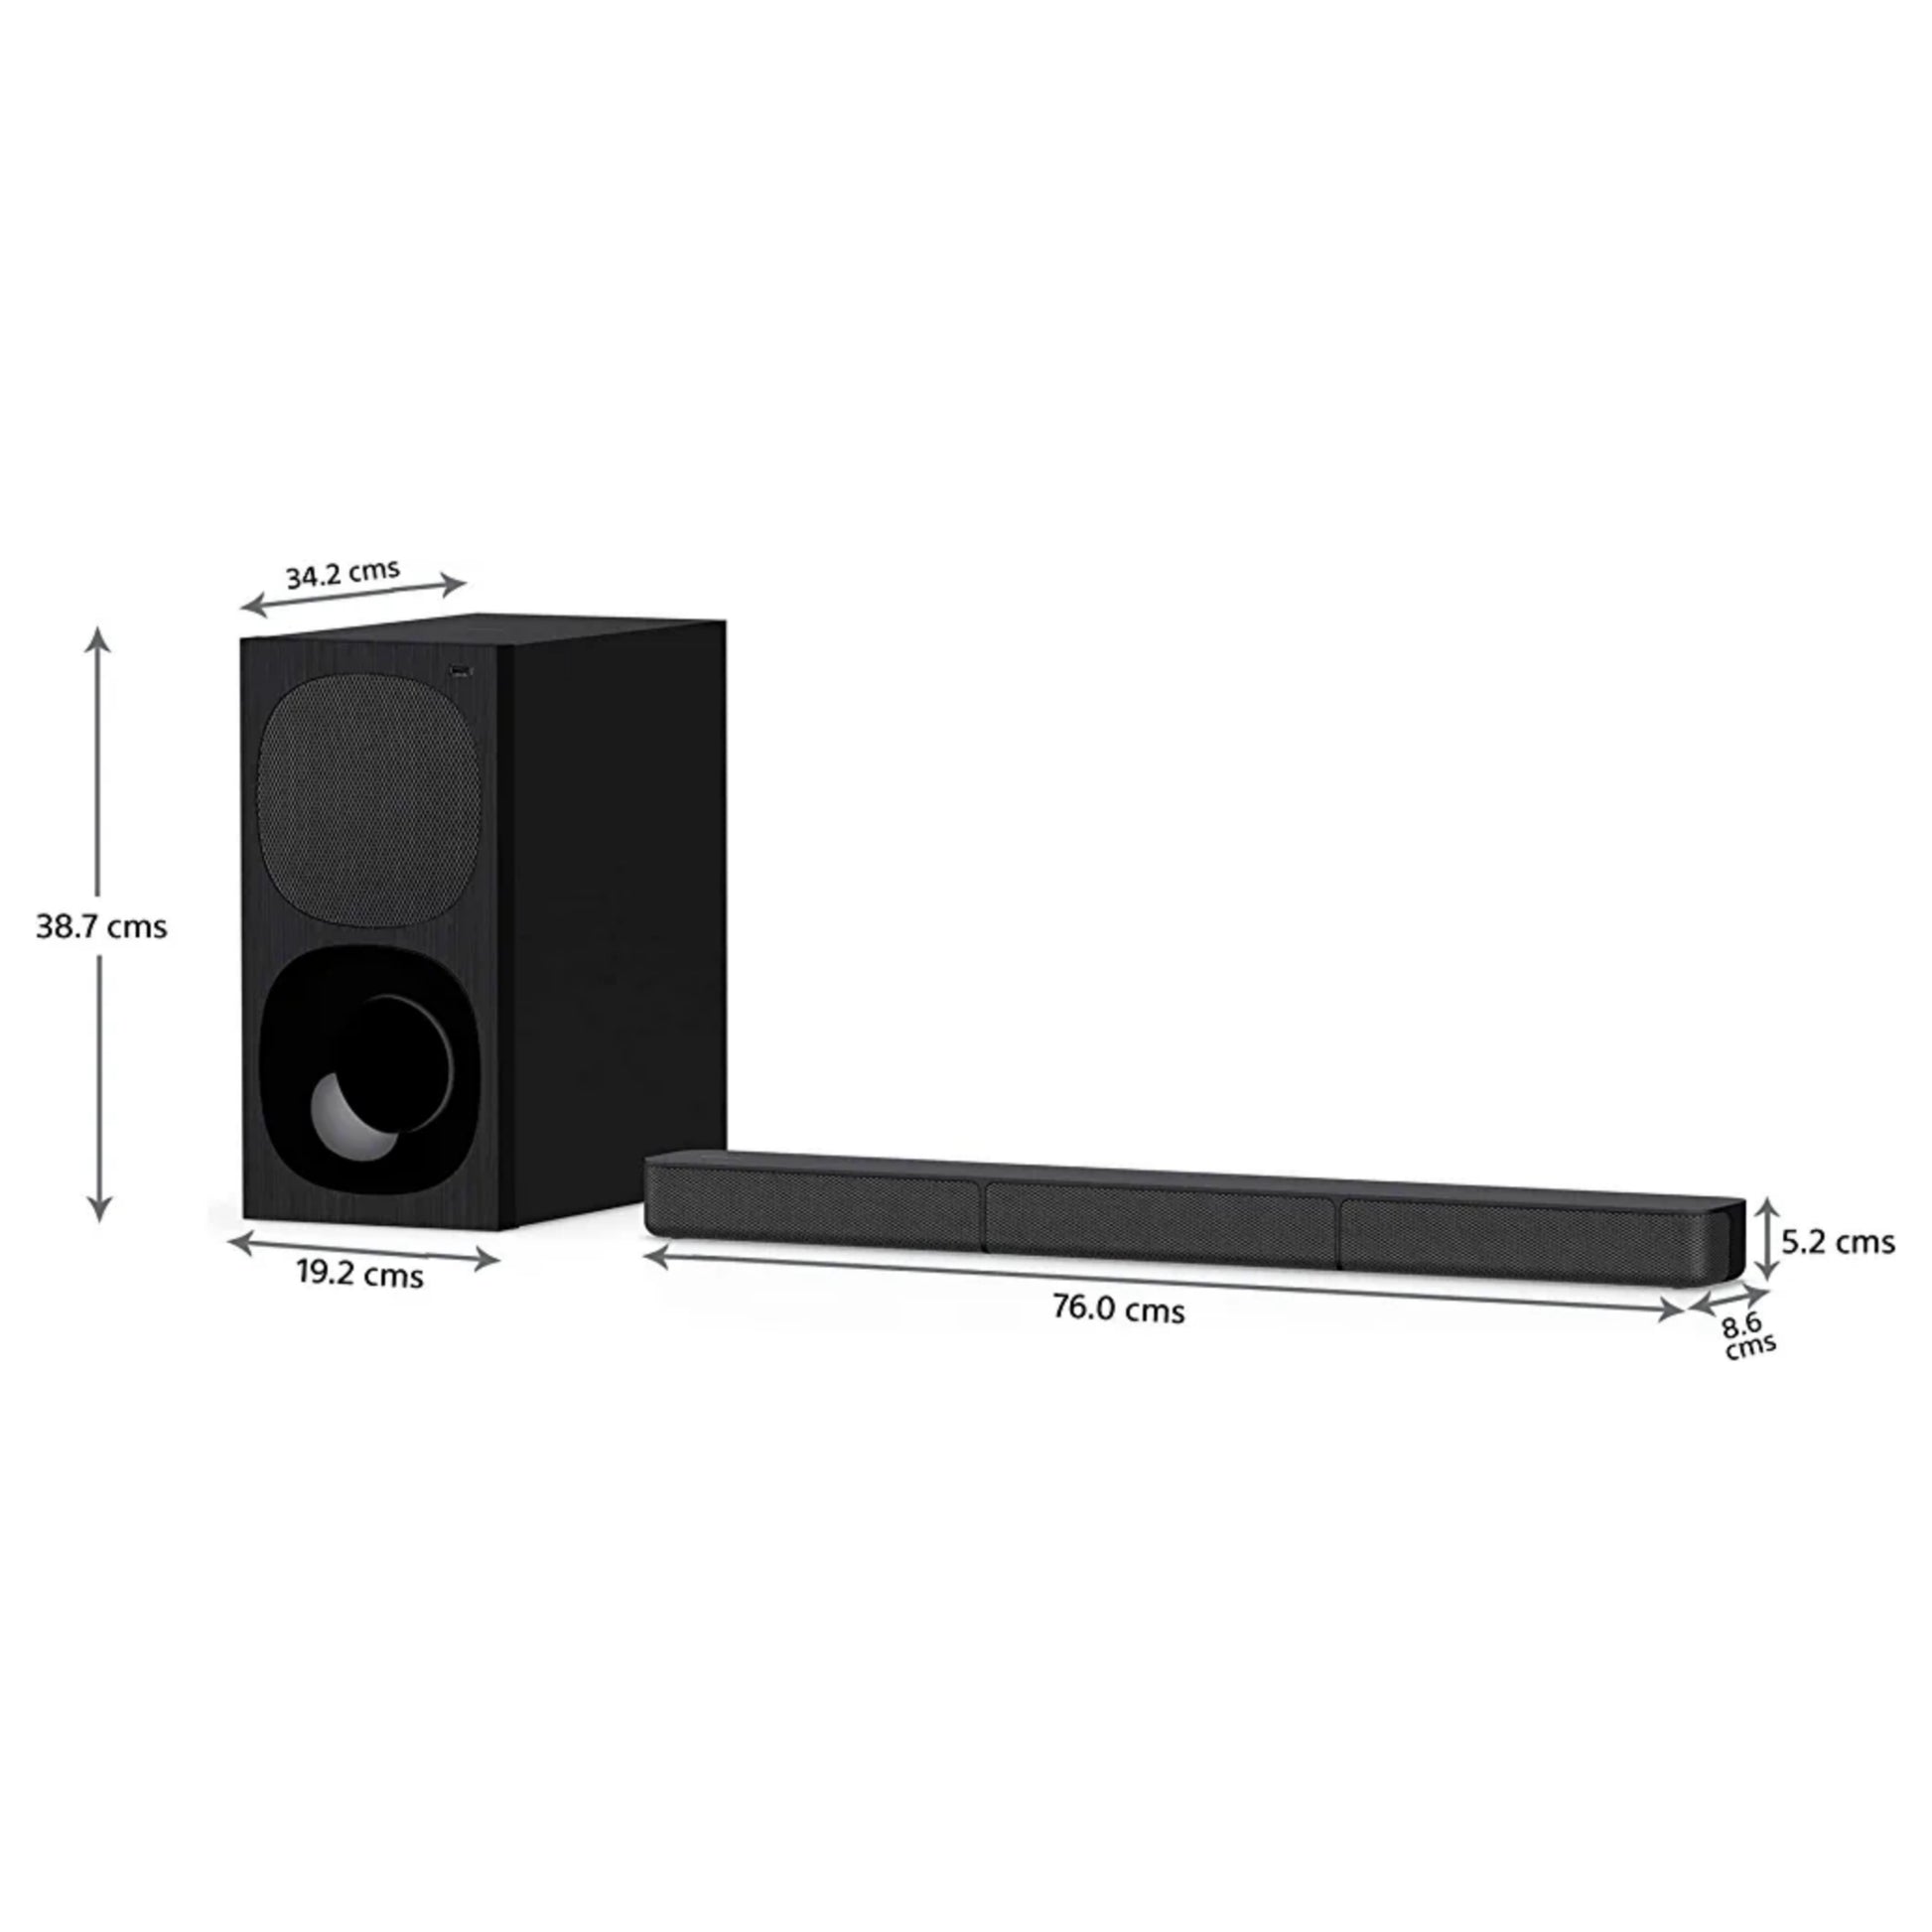 Sony HT-S20R 5.1Ch 400Watts Home Cinema Soundbar - Brand New